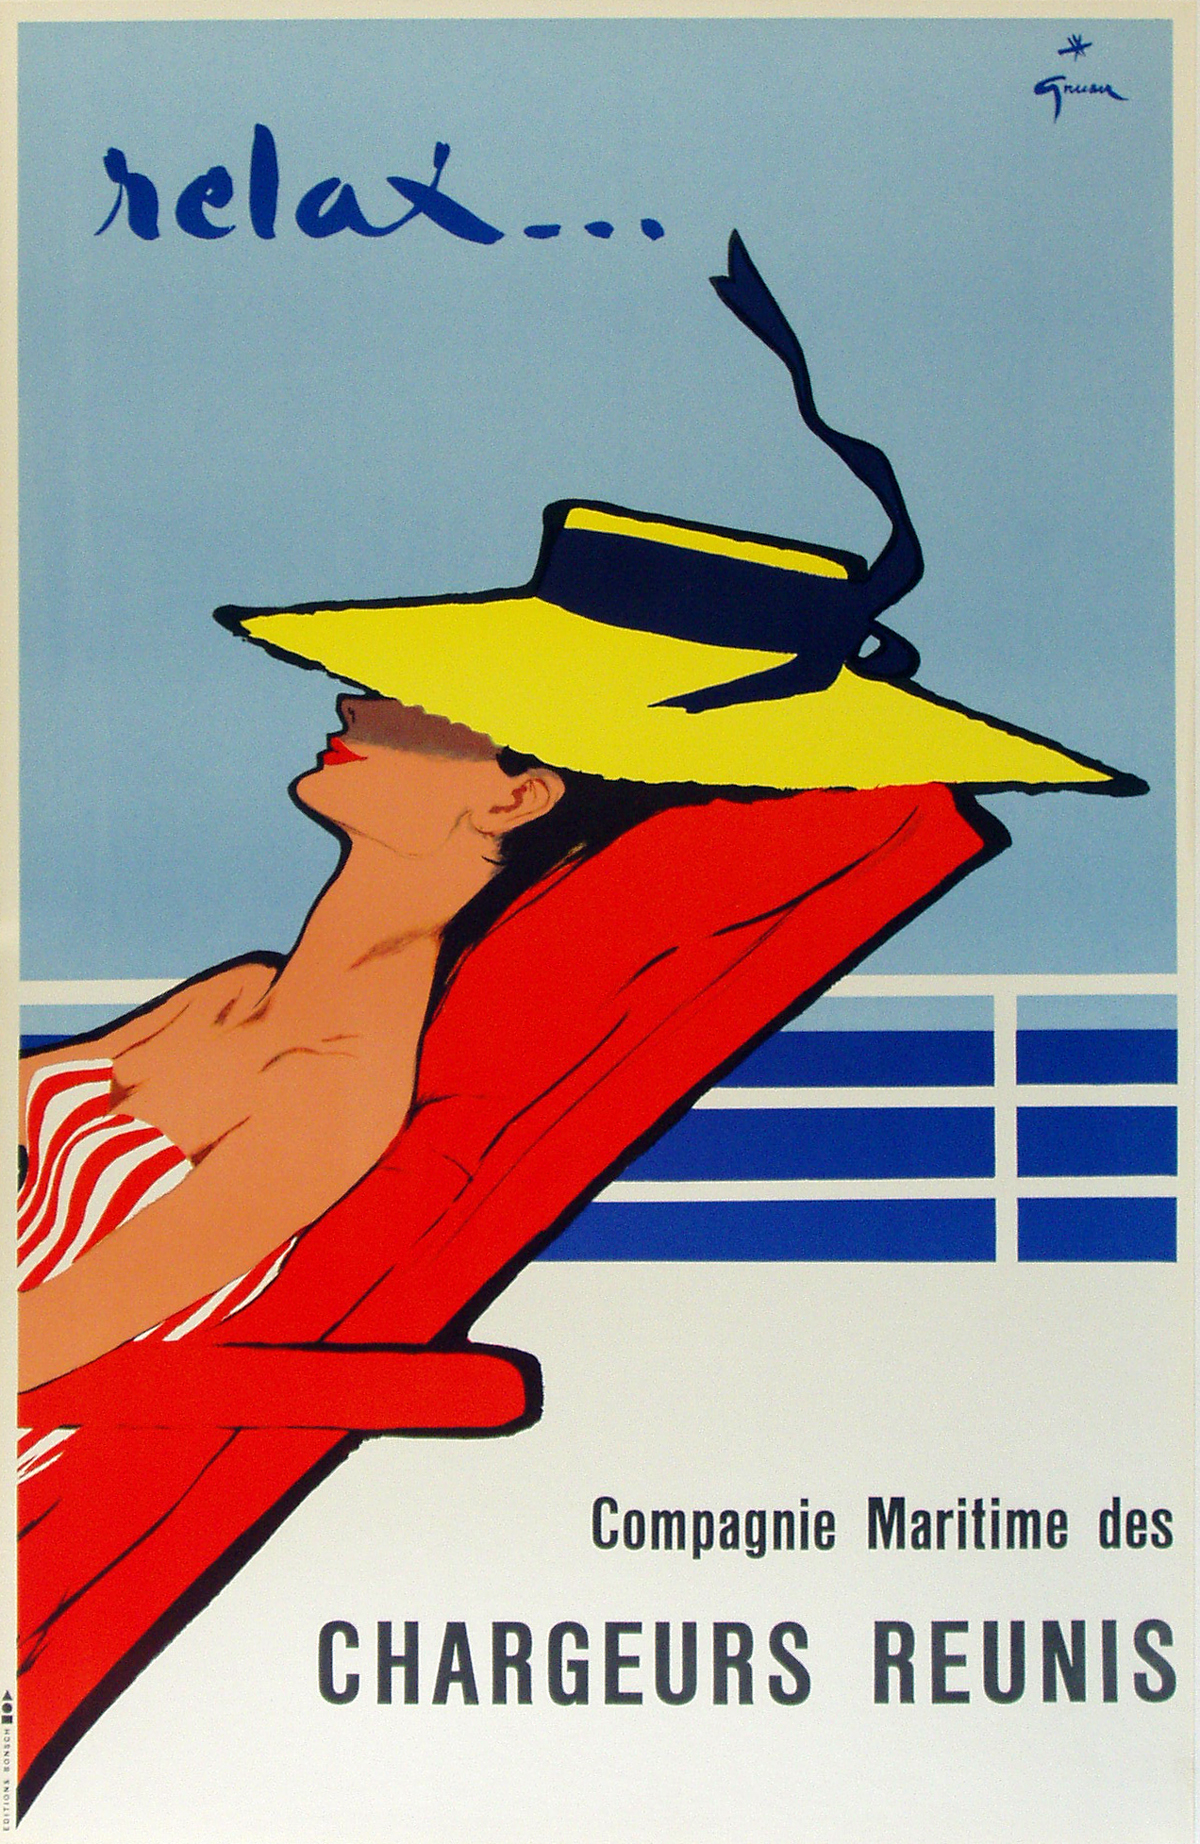 René Gruau advertisement, "Relax"